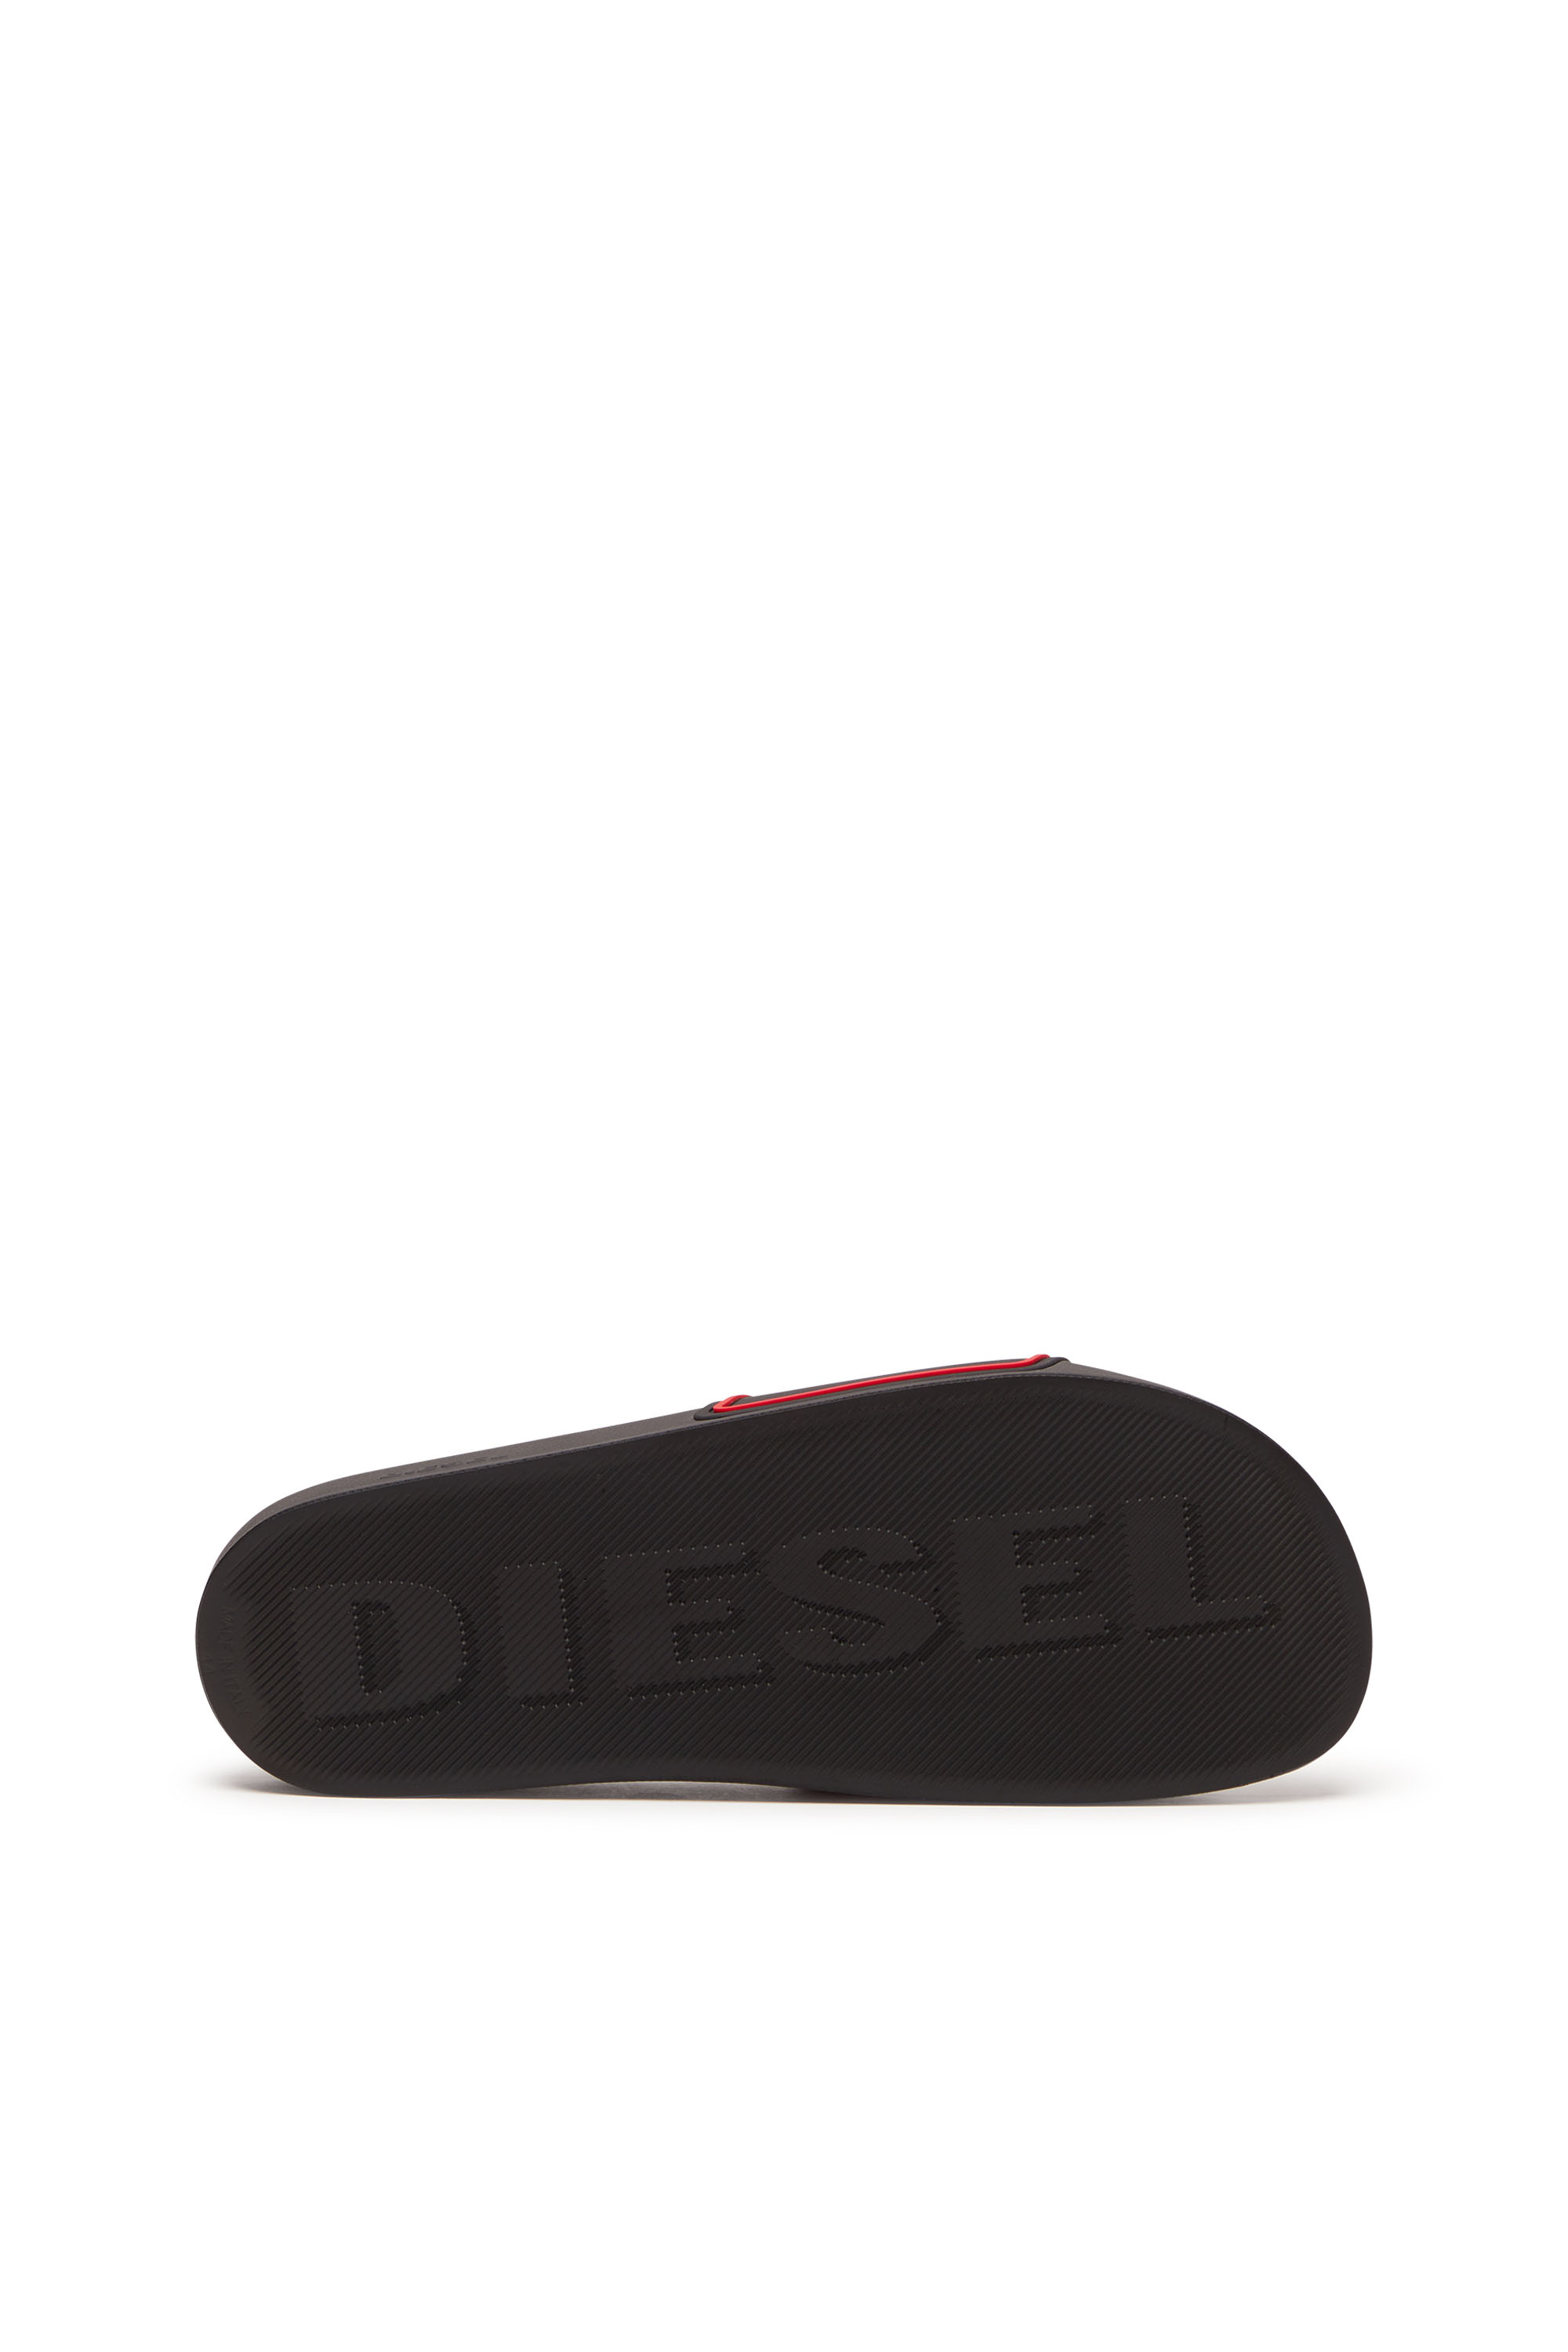 Diesel - SA-MAYEMI CC, Black/Red - Image 4